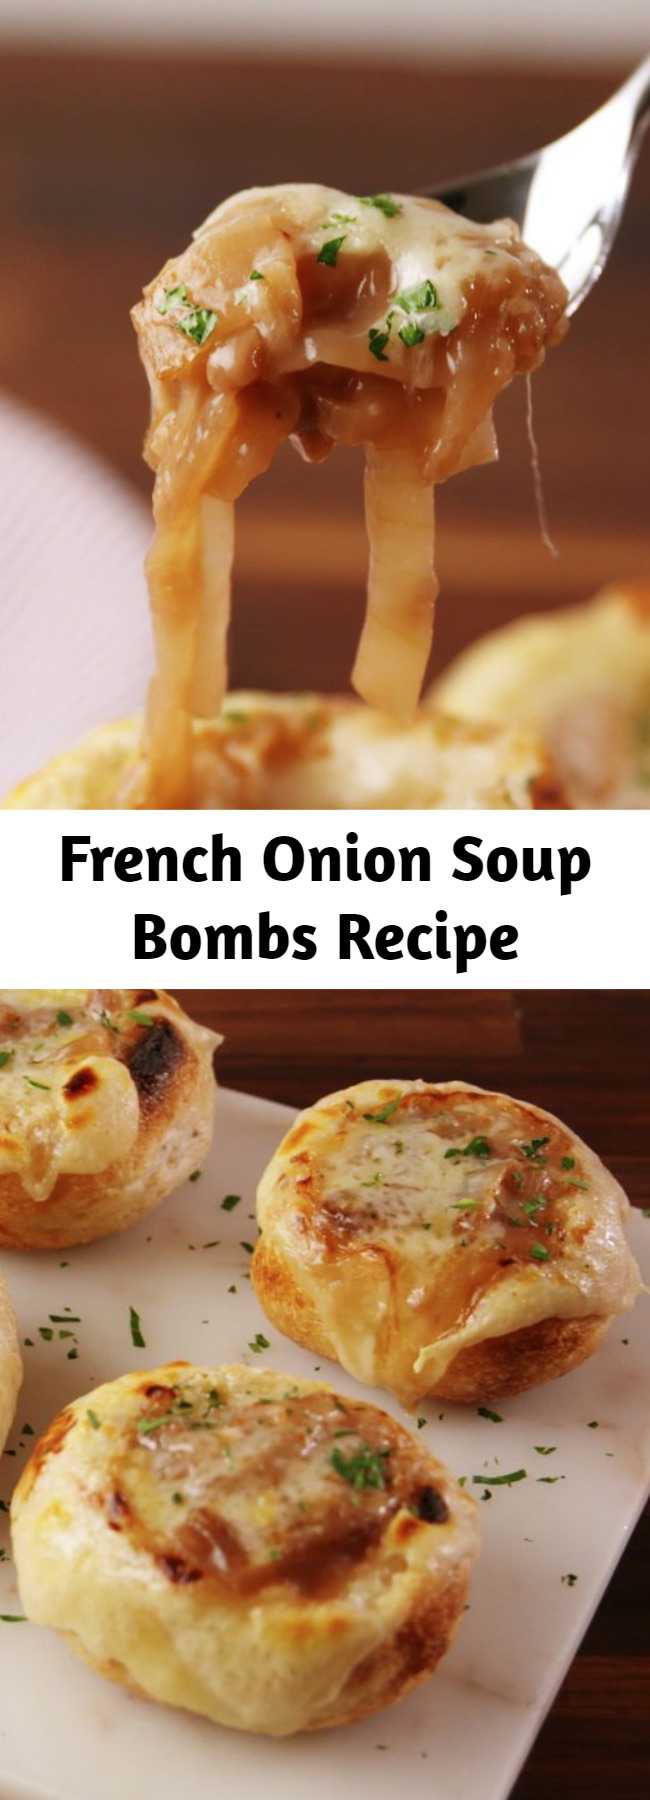 French Onion Soup Bombs Recipe - Mini bread bowls are SO CUTE. #easy #recipe #soup #mini #bites #bombs #frenchonion #onion #winter #appetizer